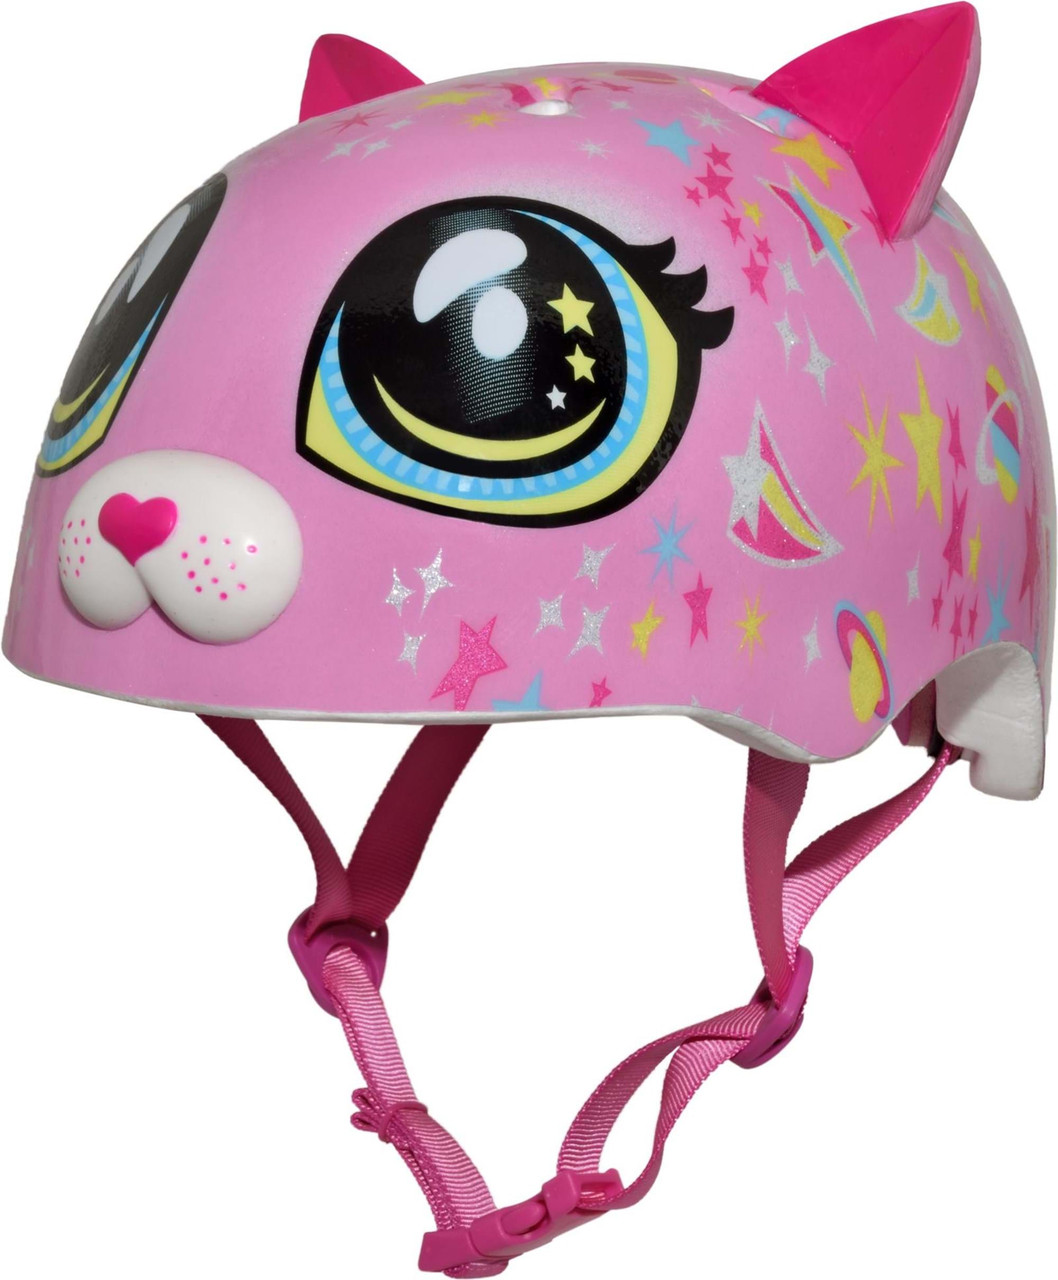 C-PREME RASKULLZ Childrens Helmet 5+ Years Astro Cat Pink Style Size 50-54CM